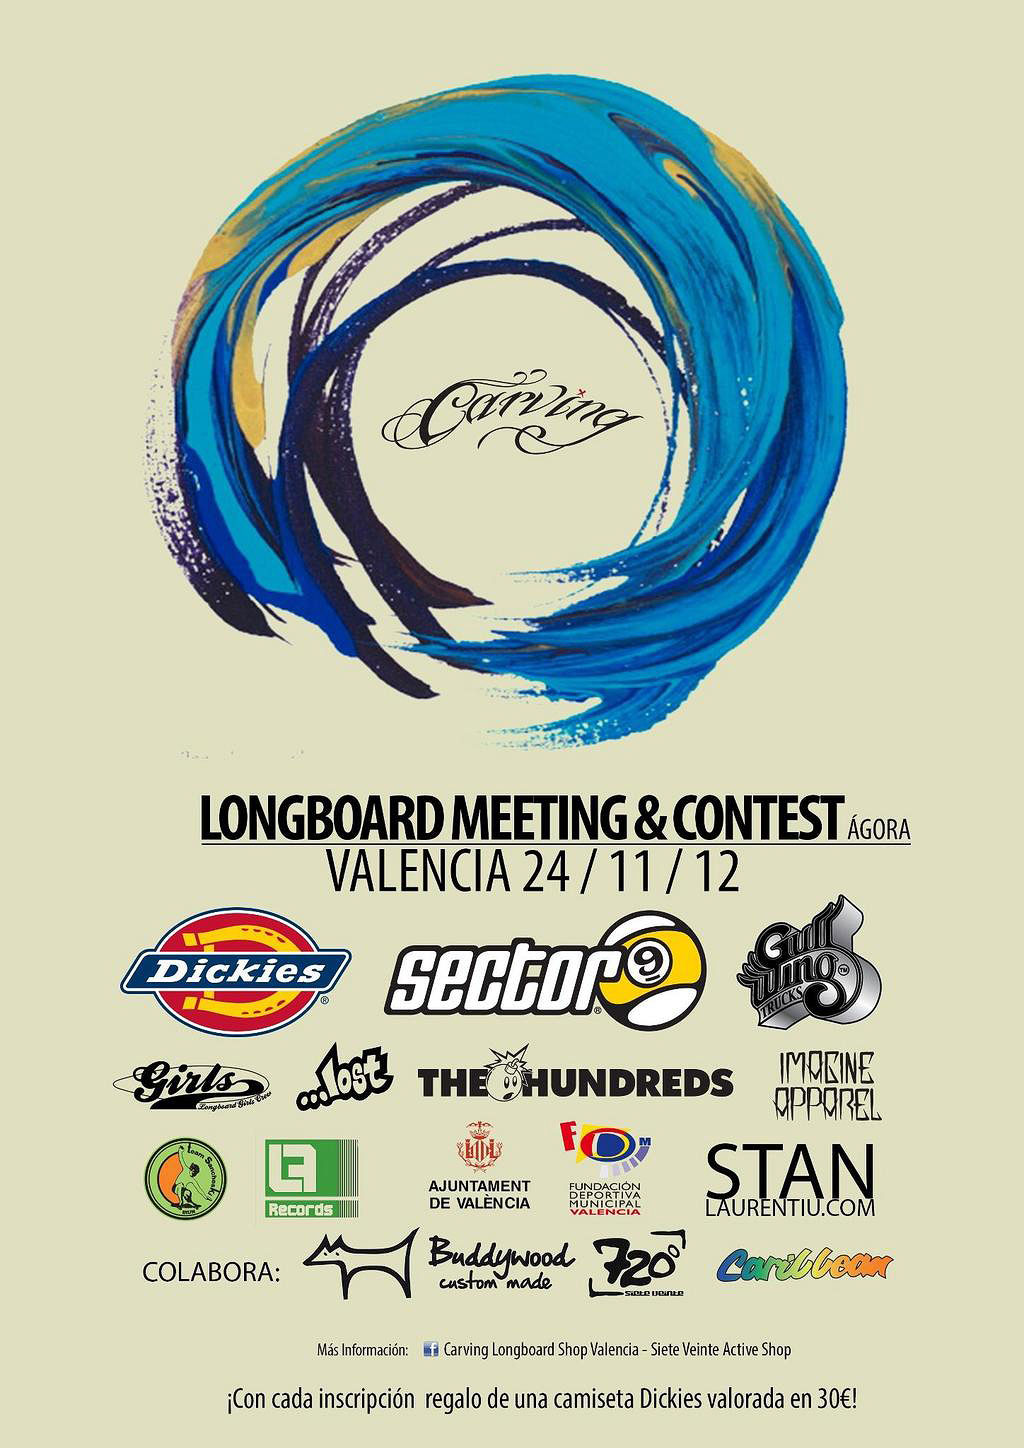 Longboard Meeting & Contest